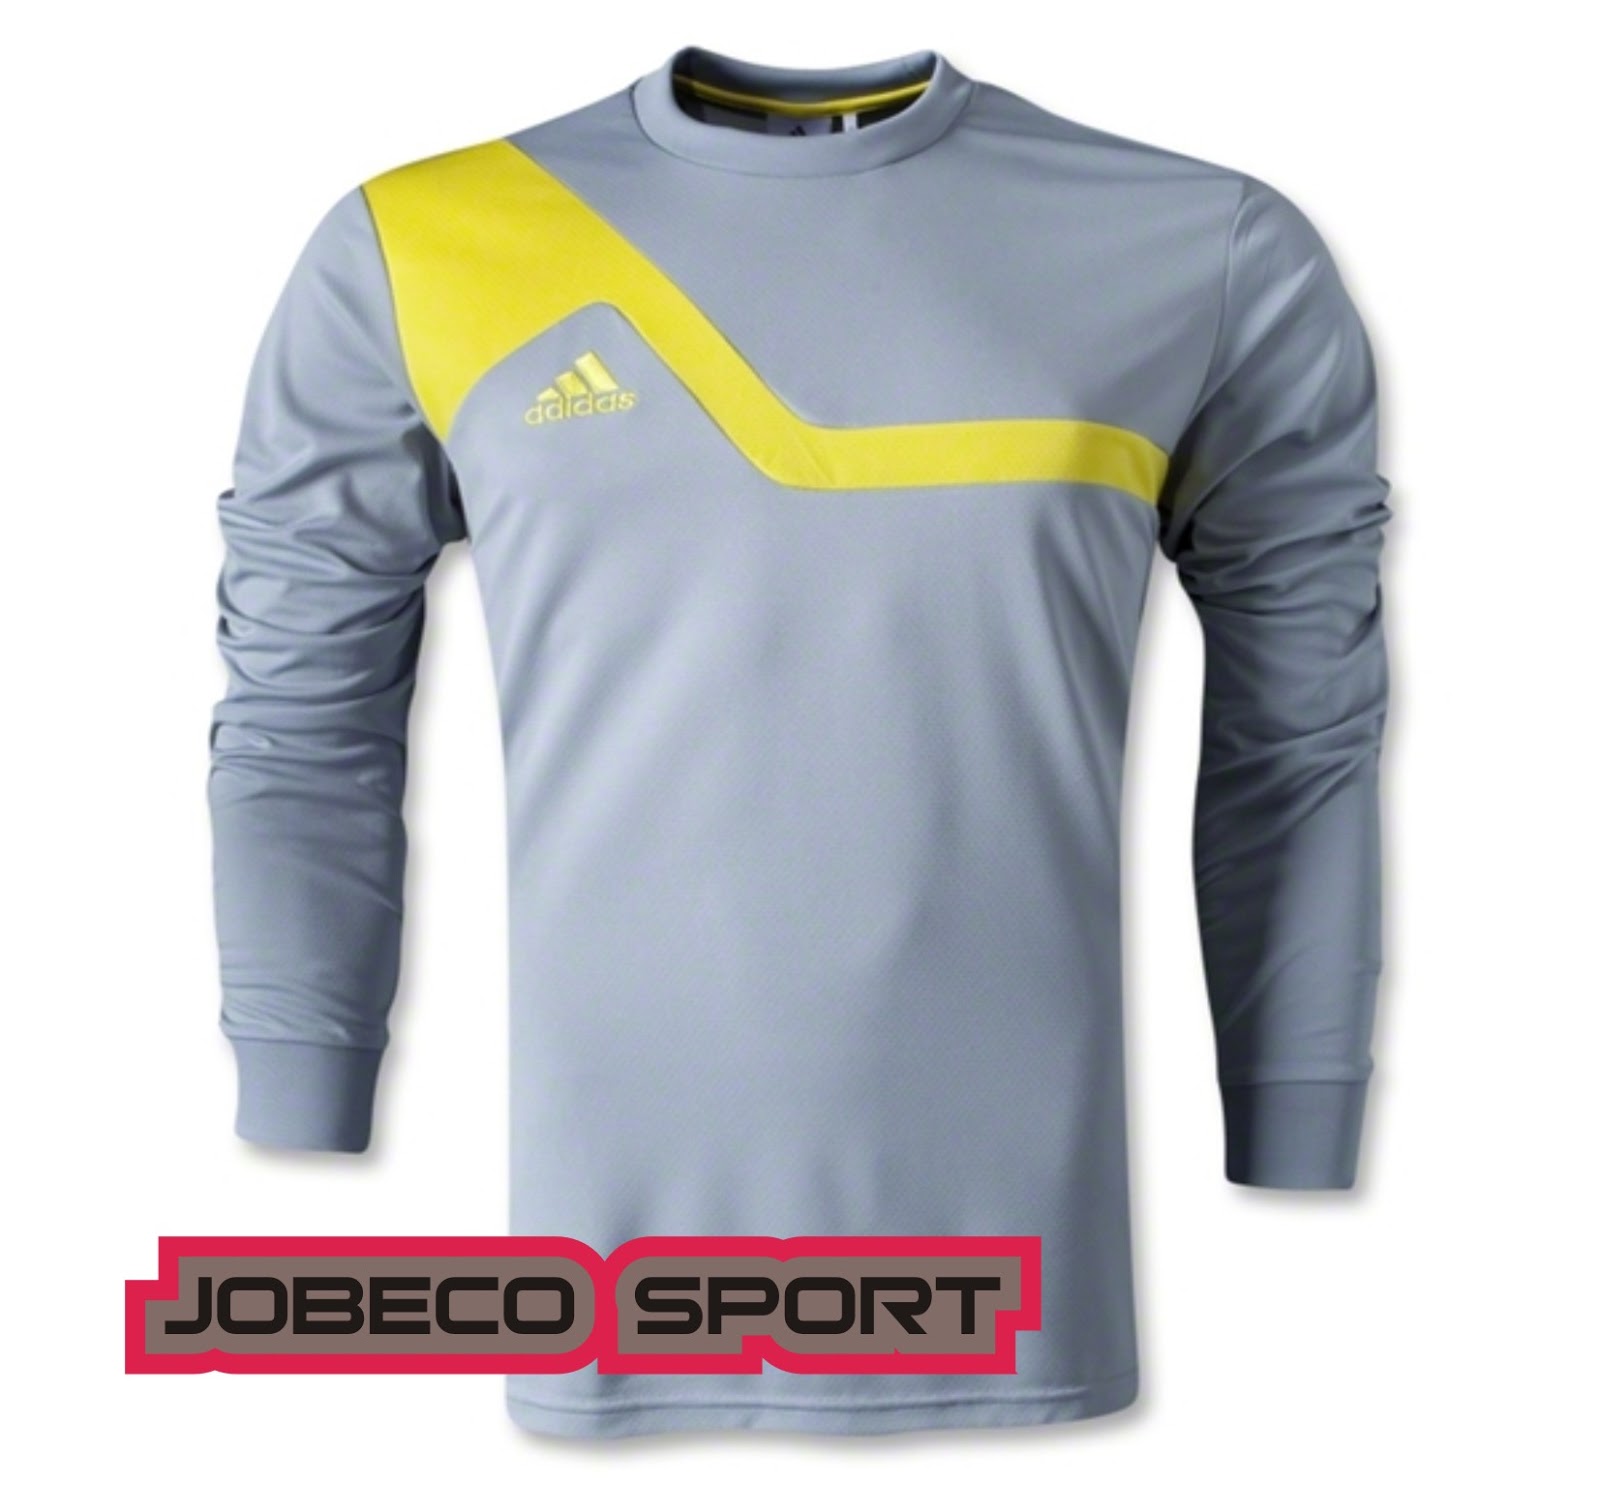 Download Kode : KAOS FUTSAL Adidas. Rep (JOBECO SPORT) - KOSTUM ...